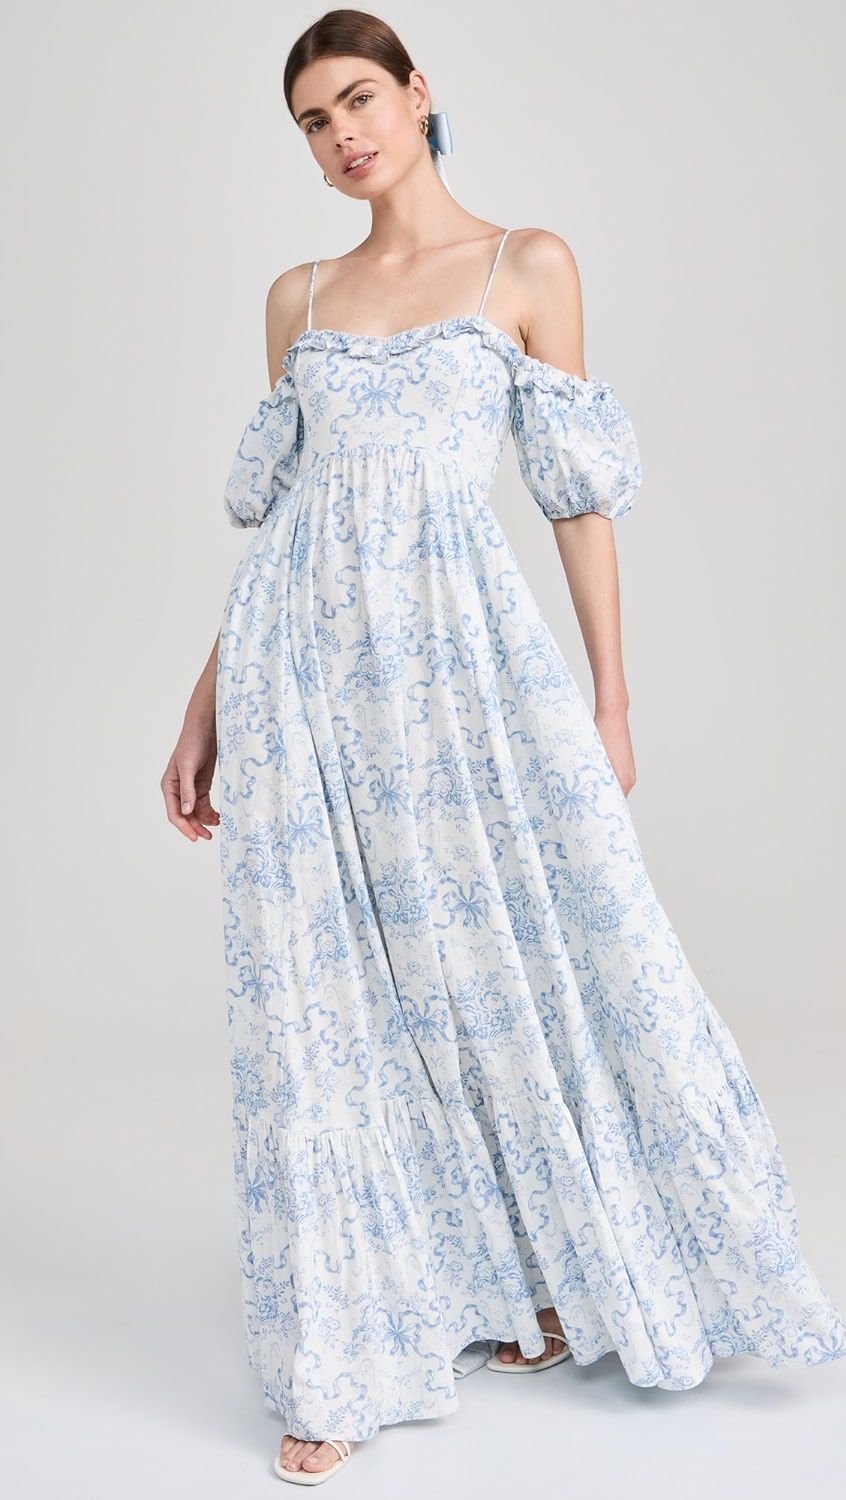 Tabithea Dress | Shopbop